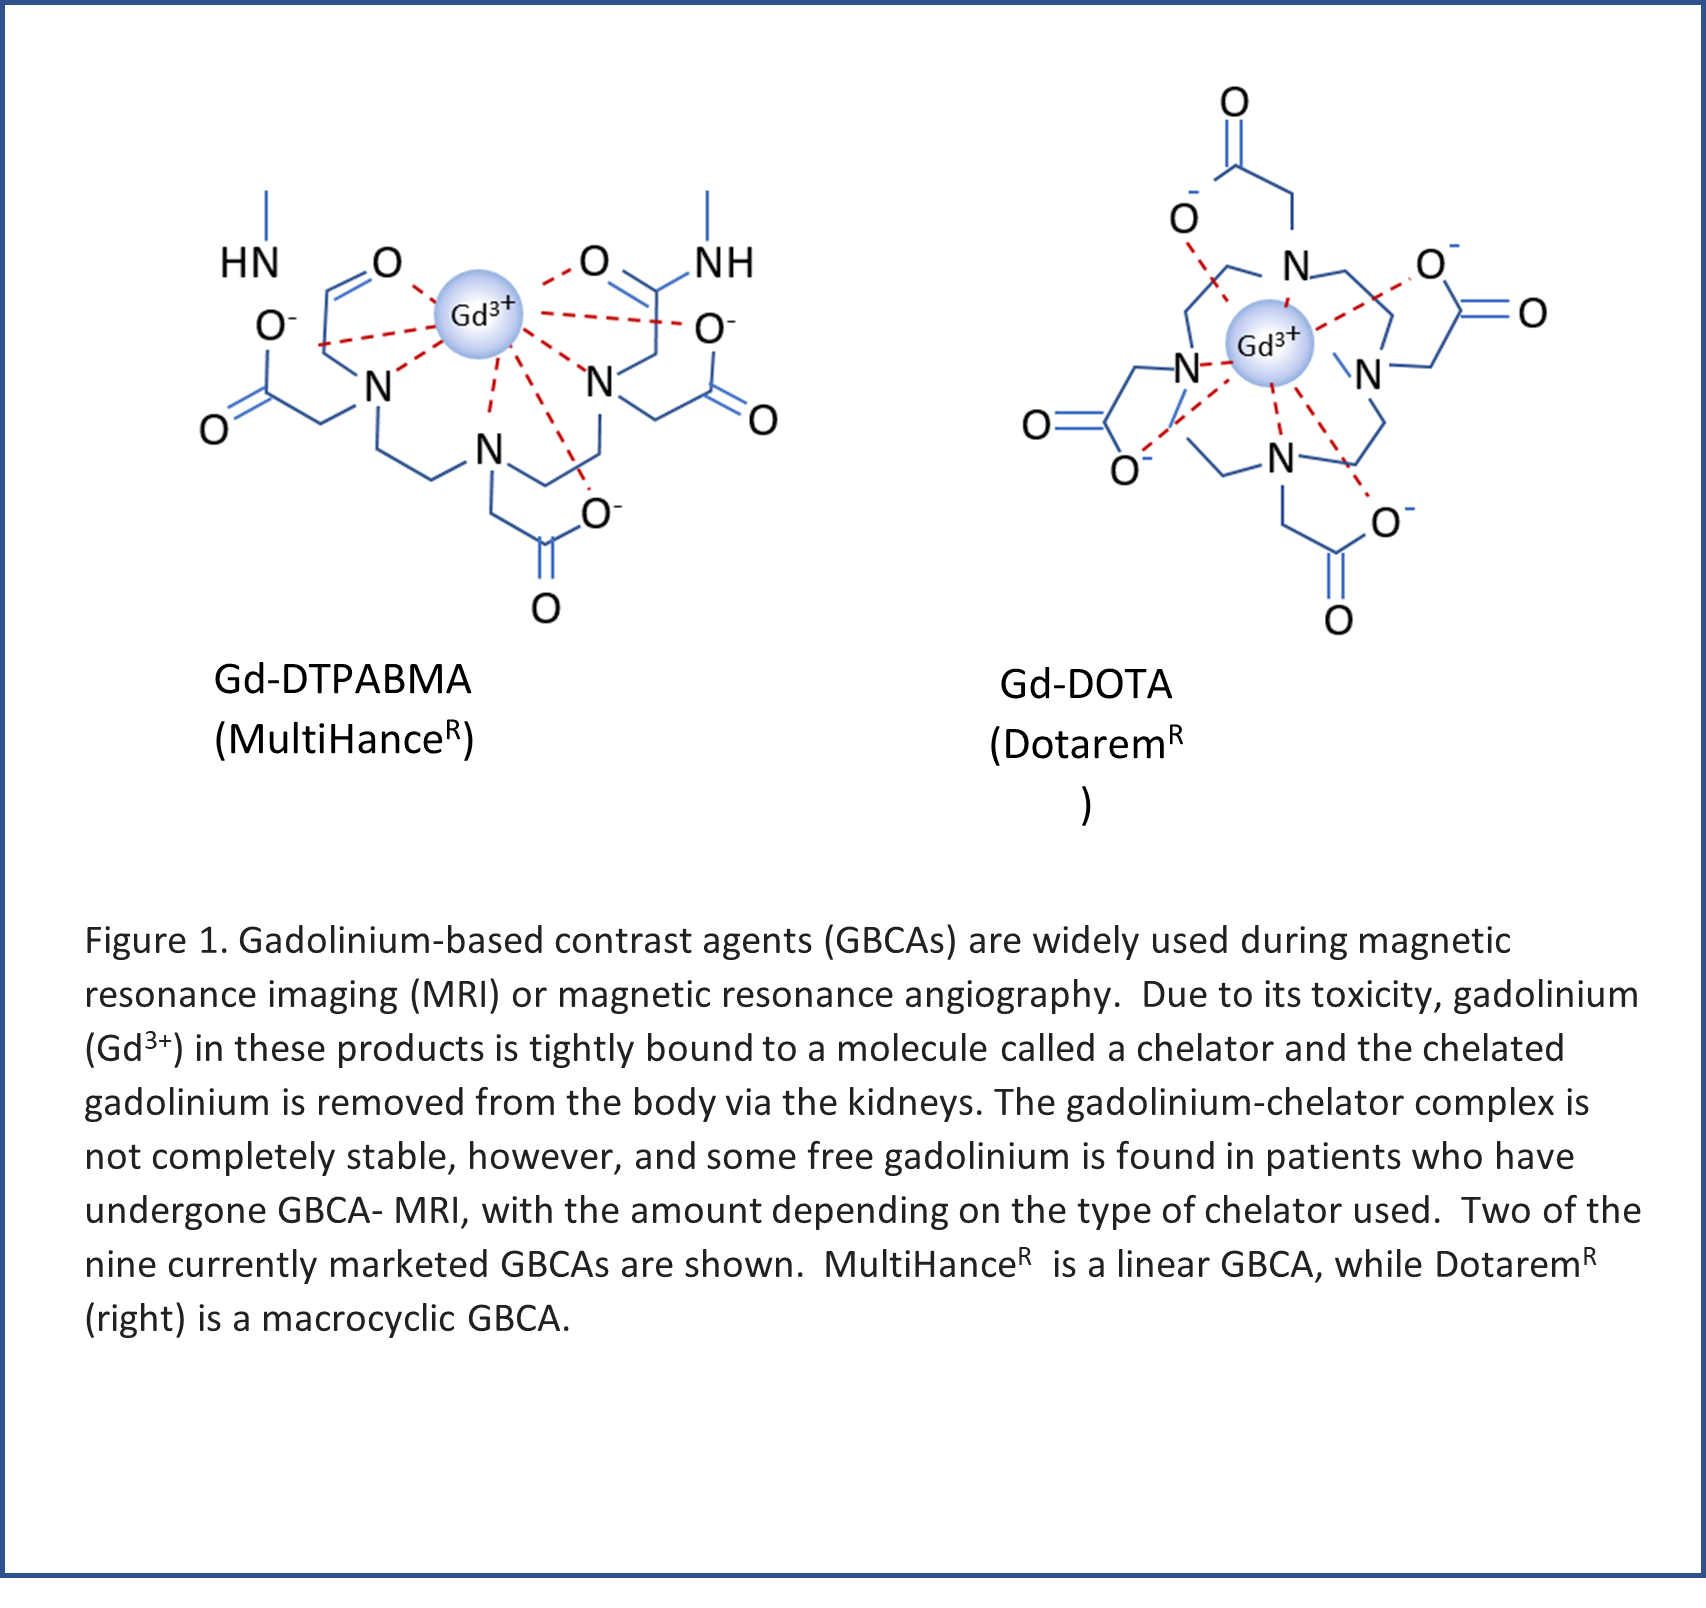 Gadolinium-based contrast agents (GBCAs)